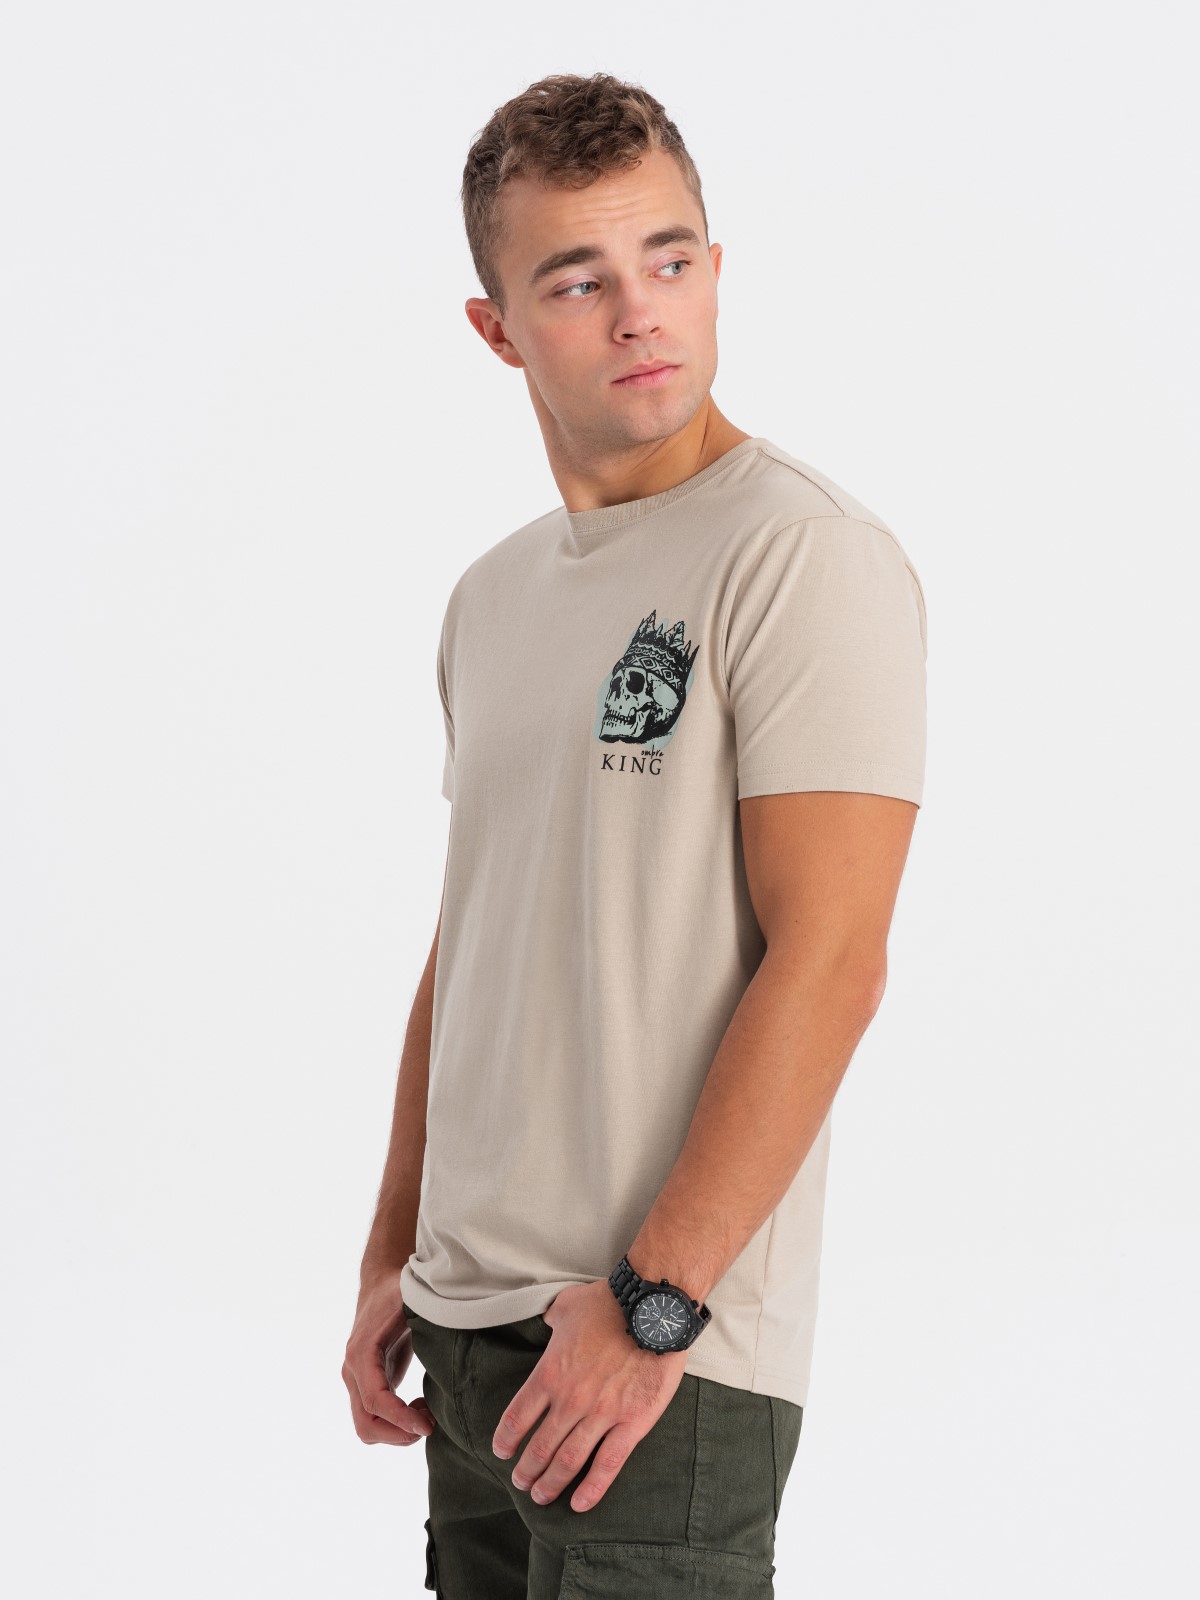 Ombre Men's cotton t-shirt with chest print - beige